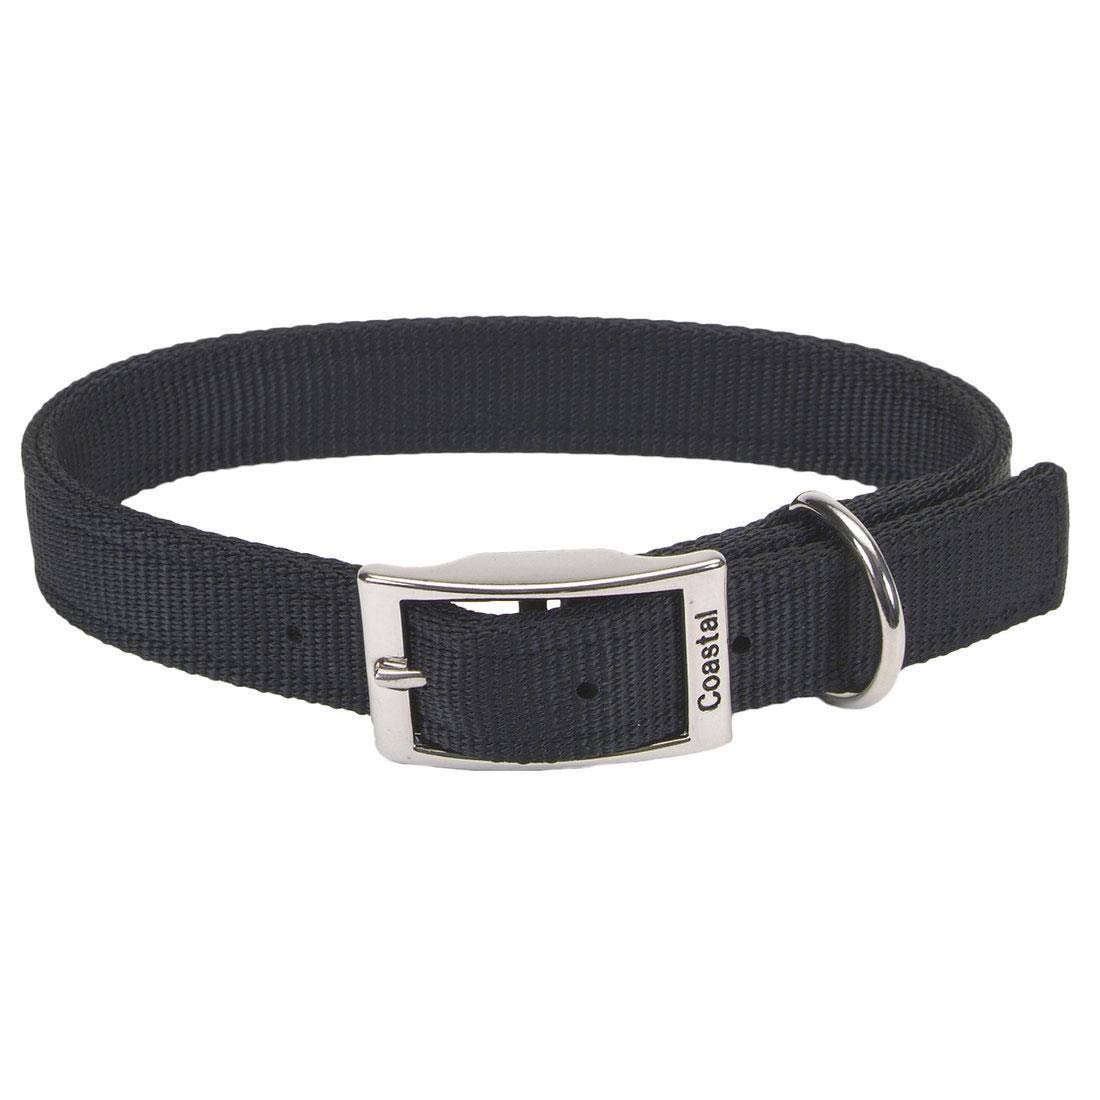 Coastal Pet Products Dog Collar - Black, 1"x26"